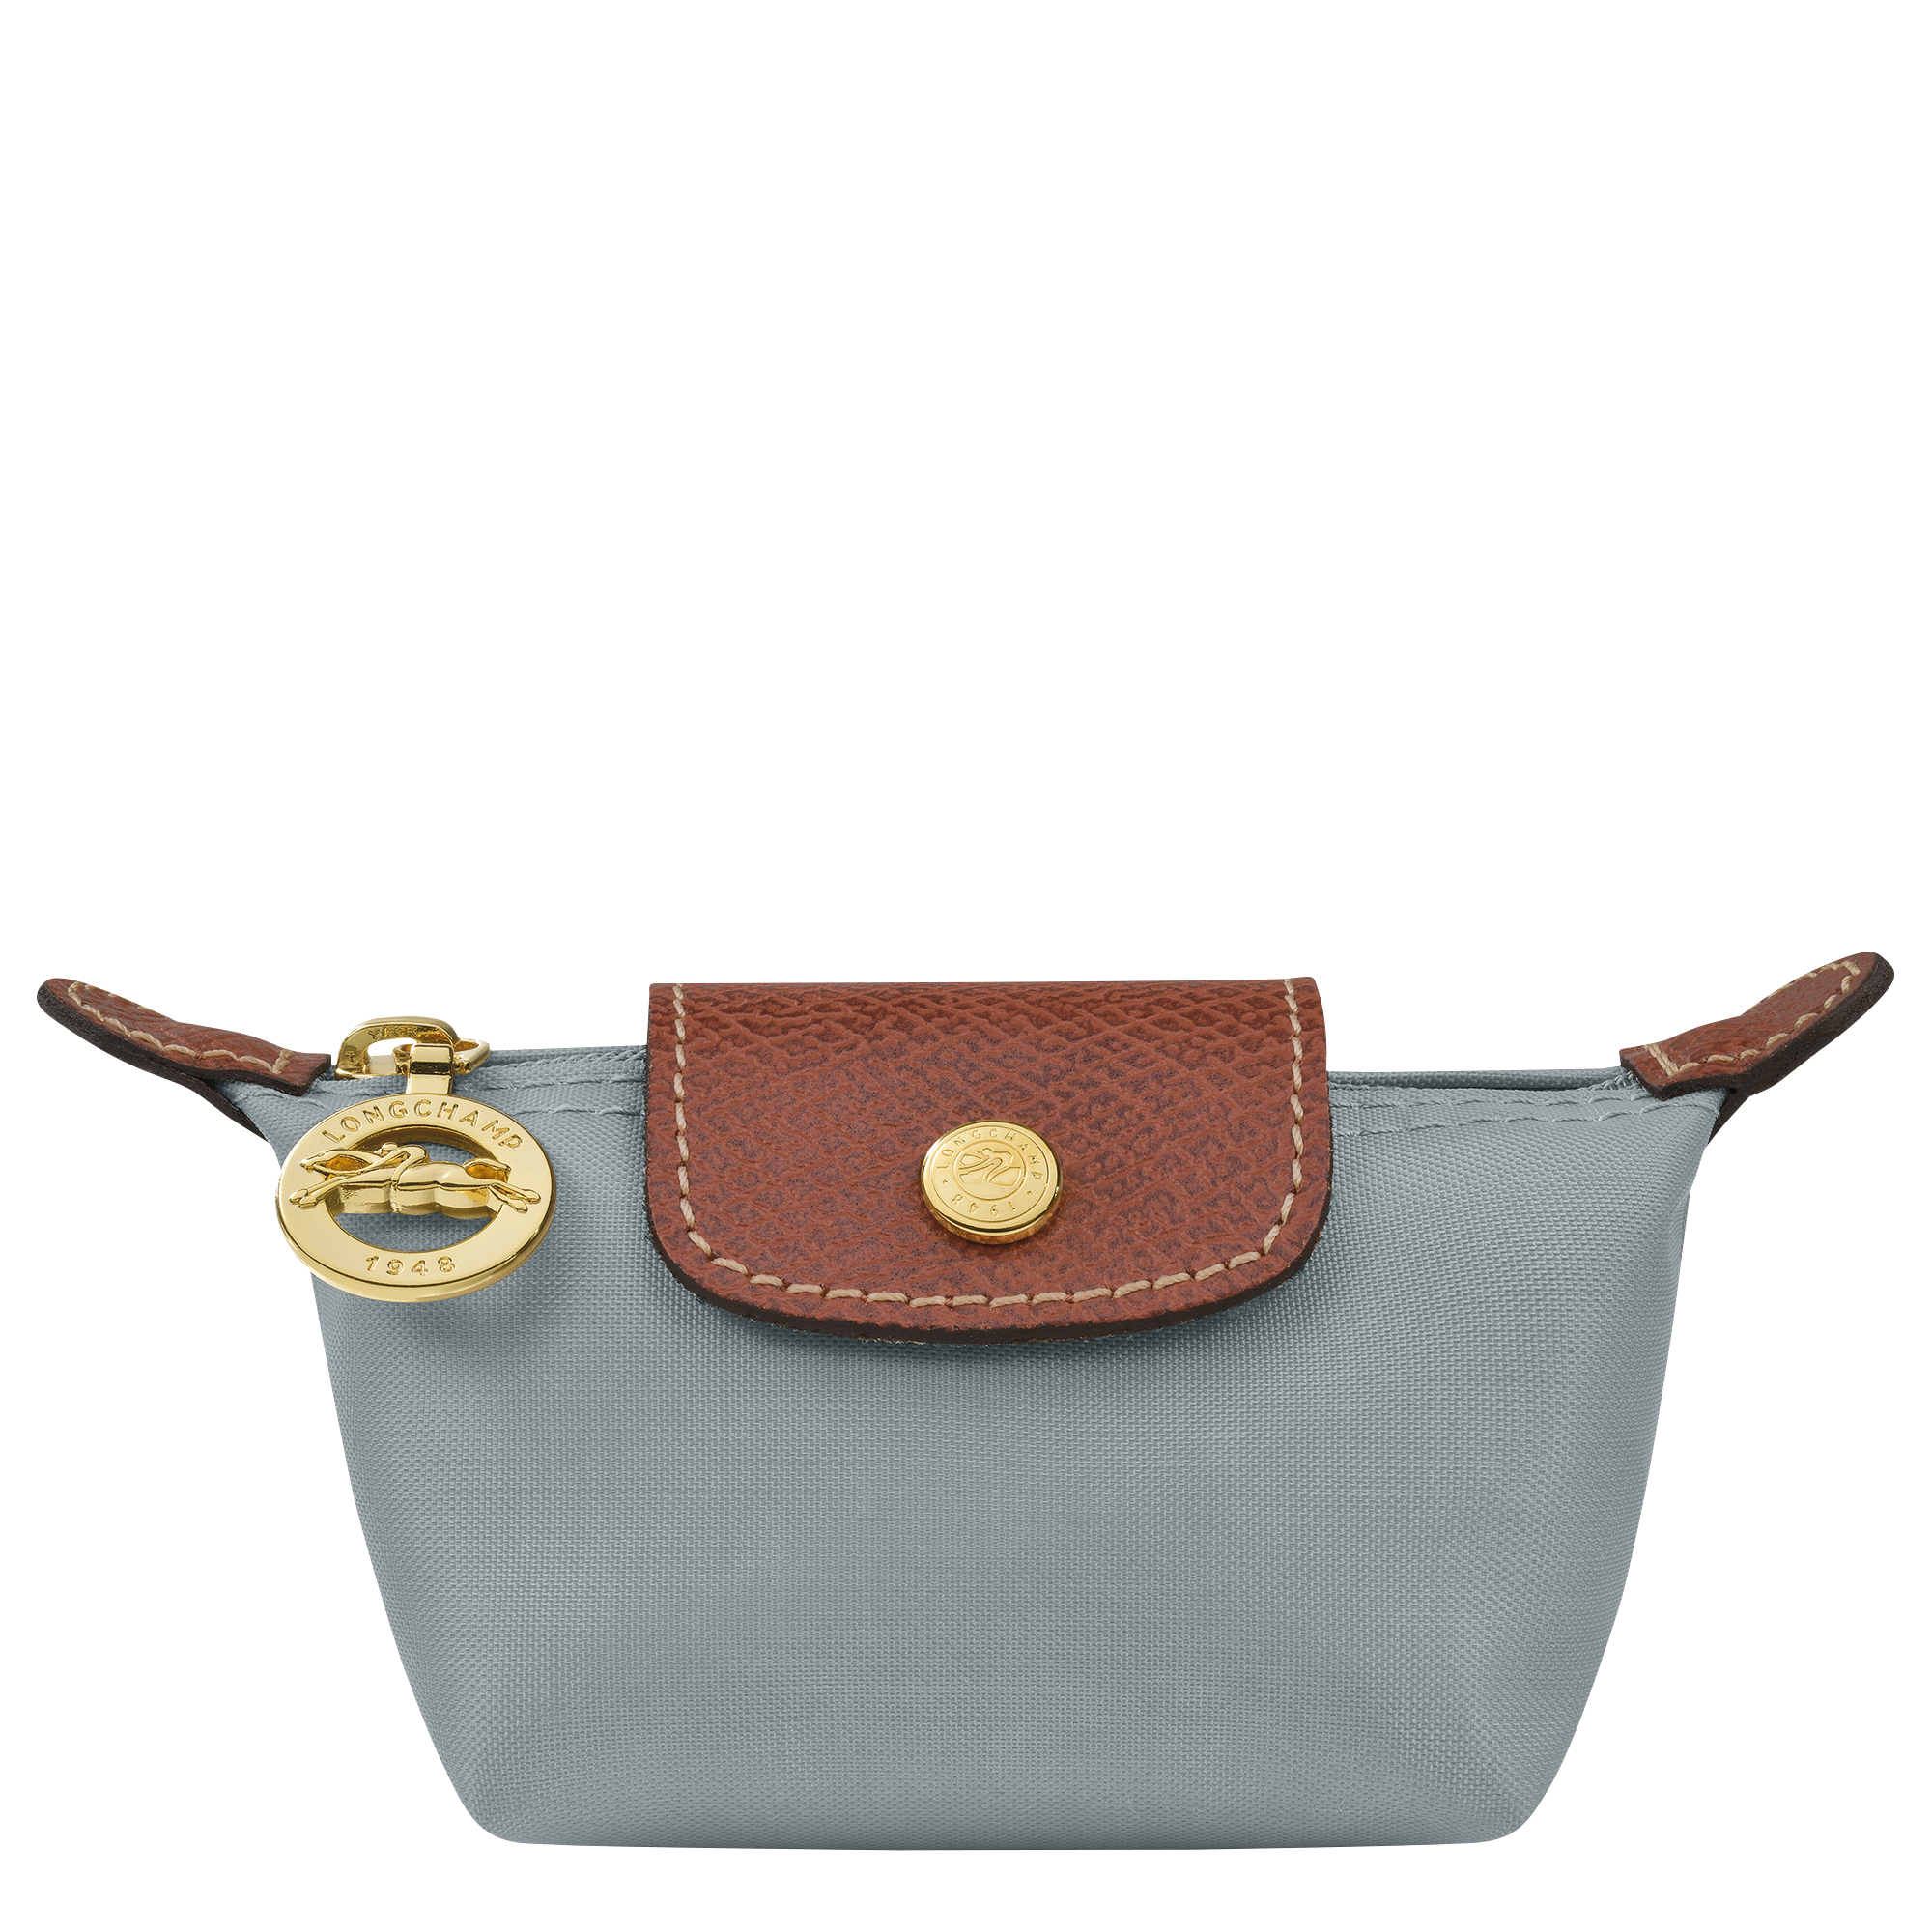 My local TJ Maxx, new shipment of Longchamp : r/handbags